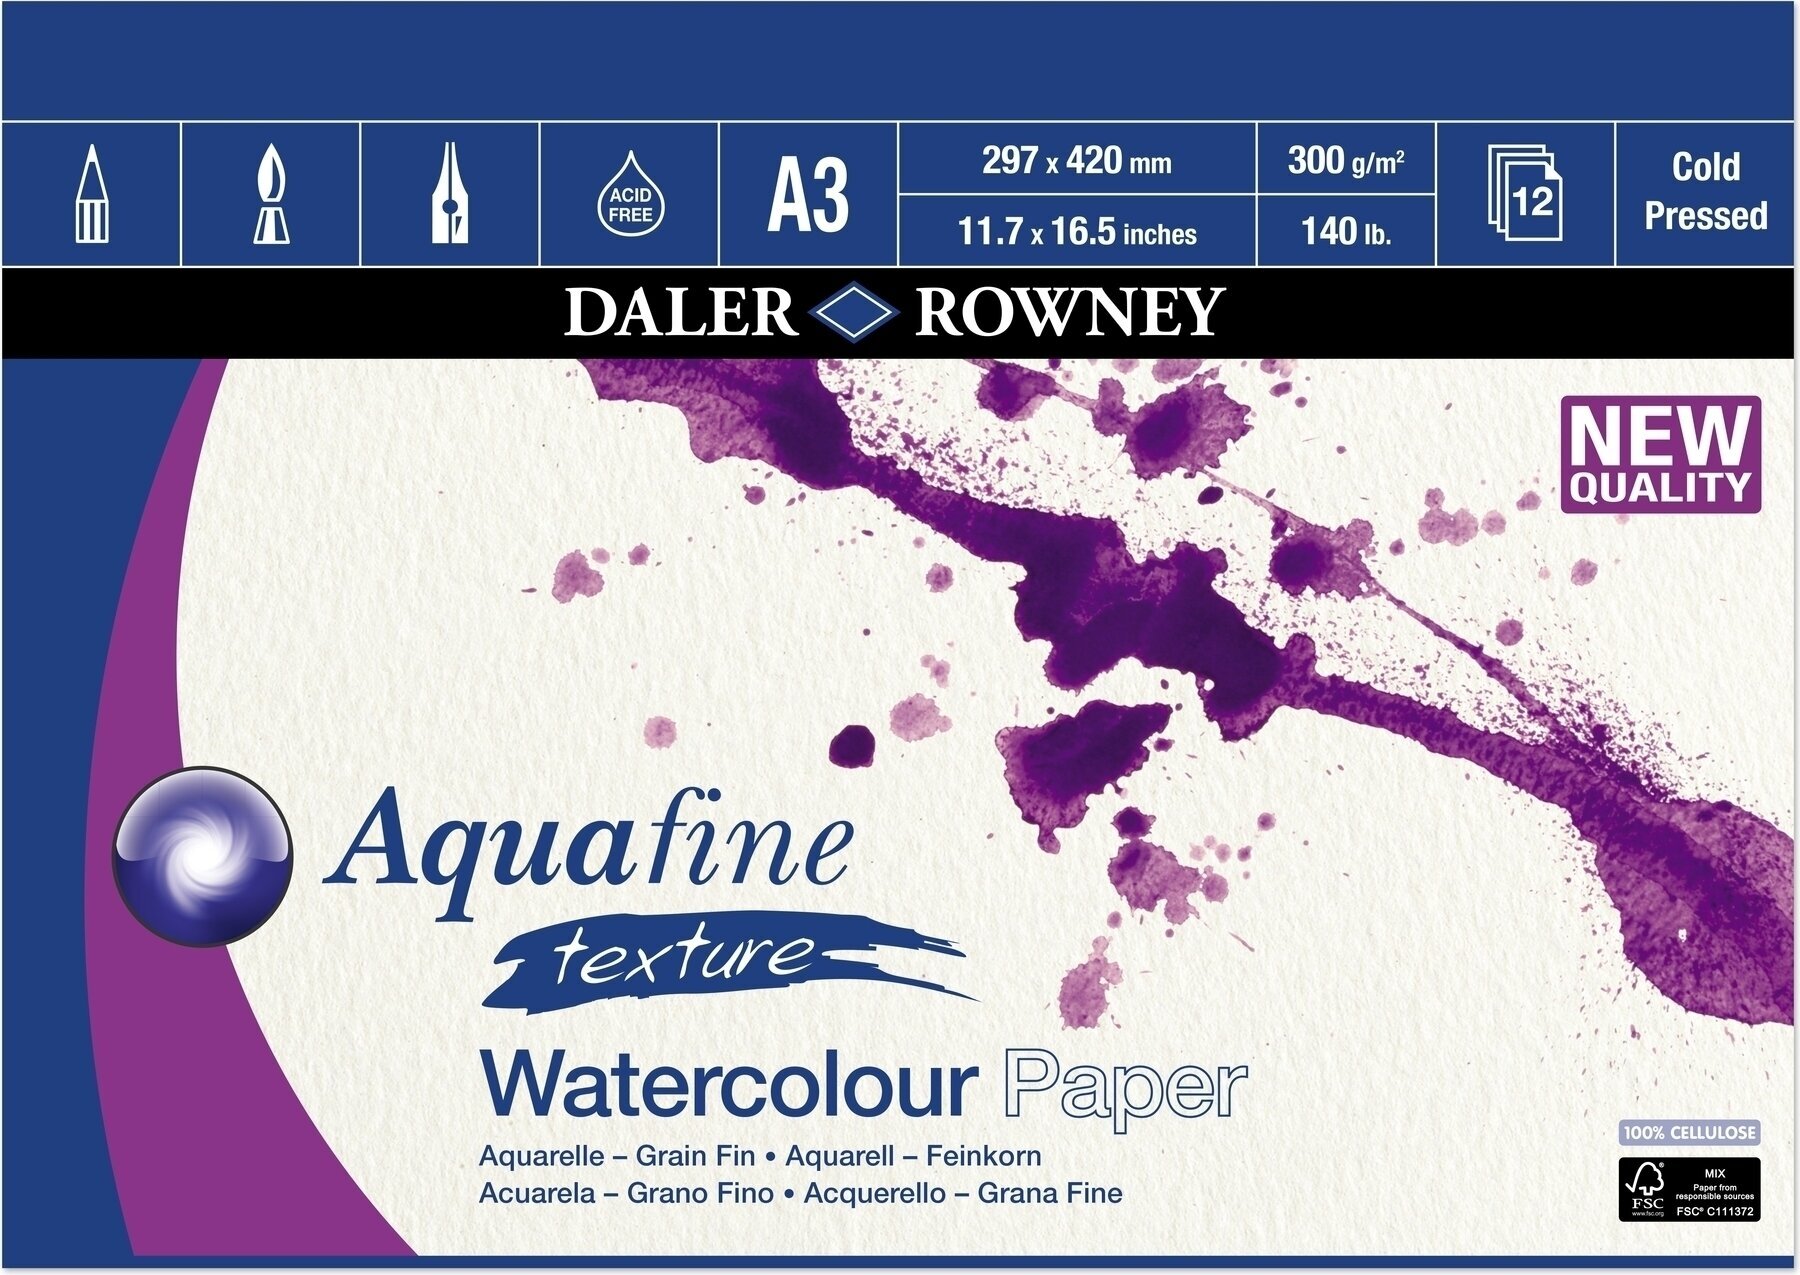 Carnet de croquis Daler Rowney Aquafine Texture Watercolour Paper Aquafine A3 300 g Carnet de croquis